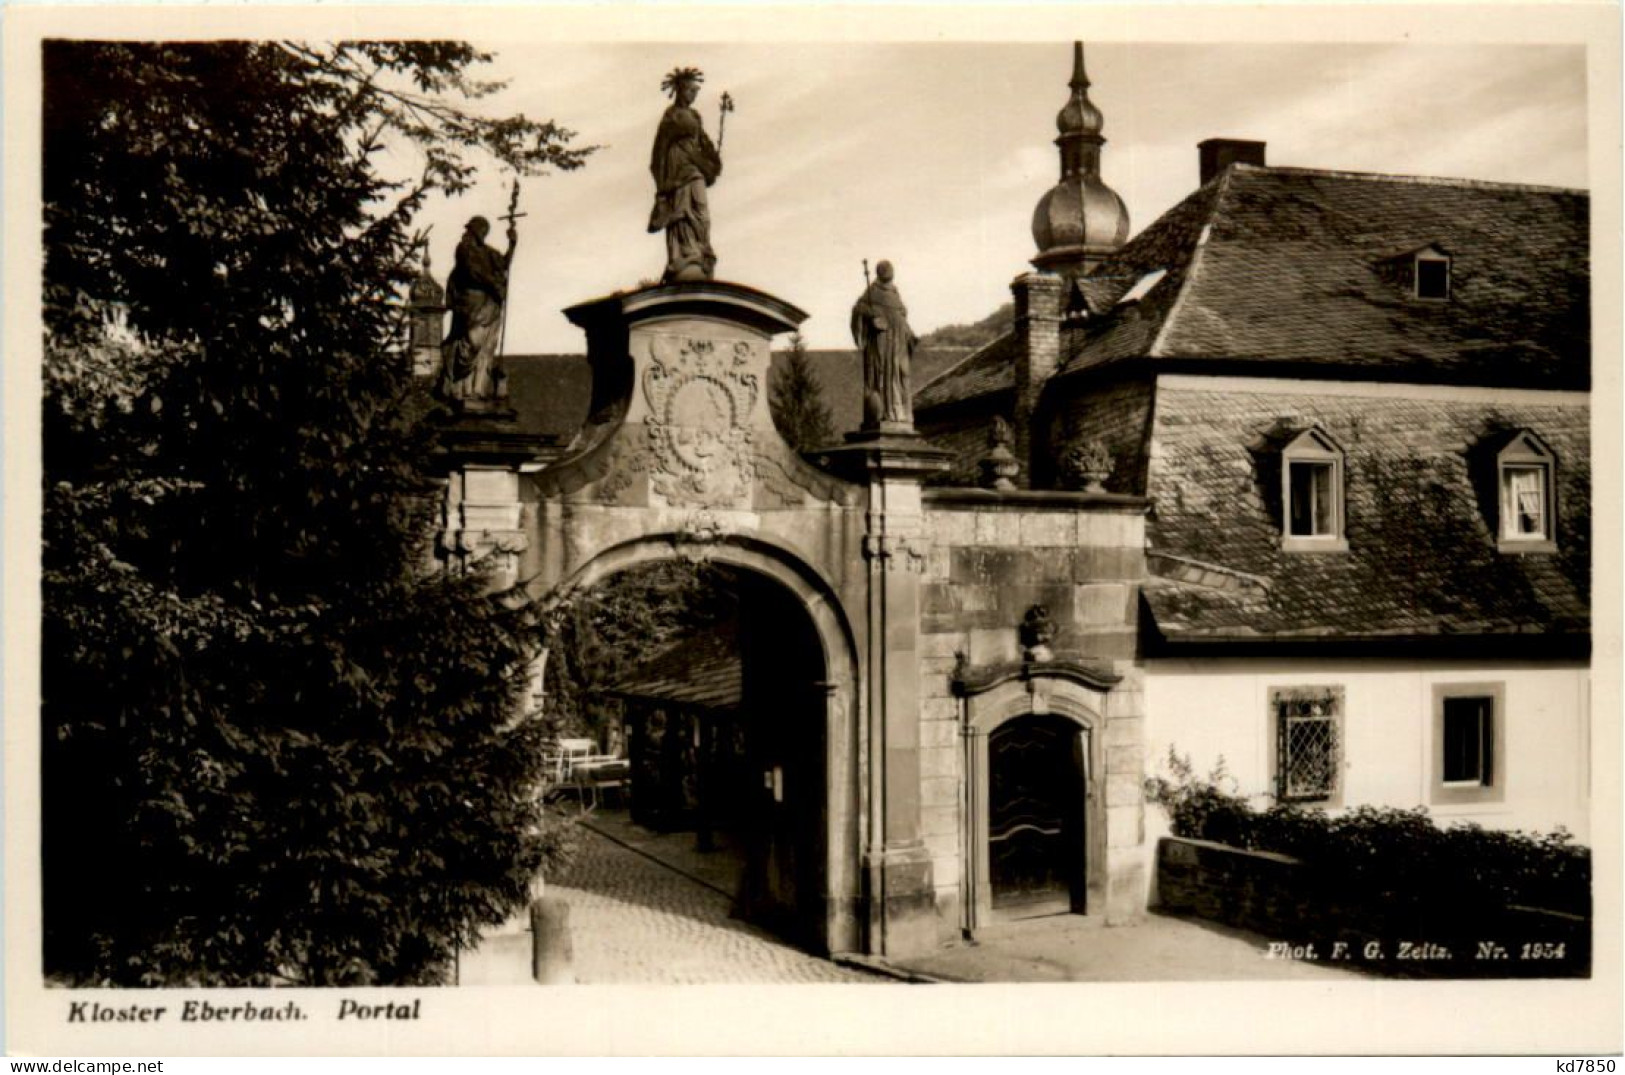 Abtei Kloster Eberbach, Portal - Eltville